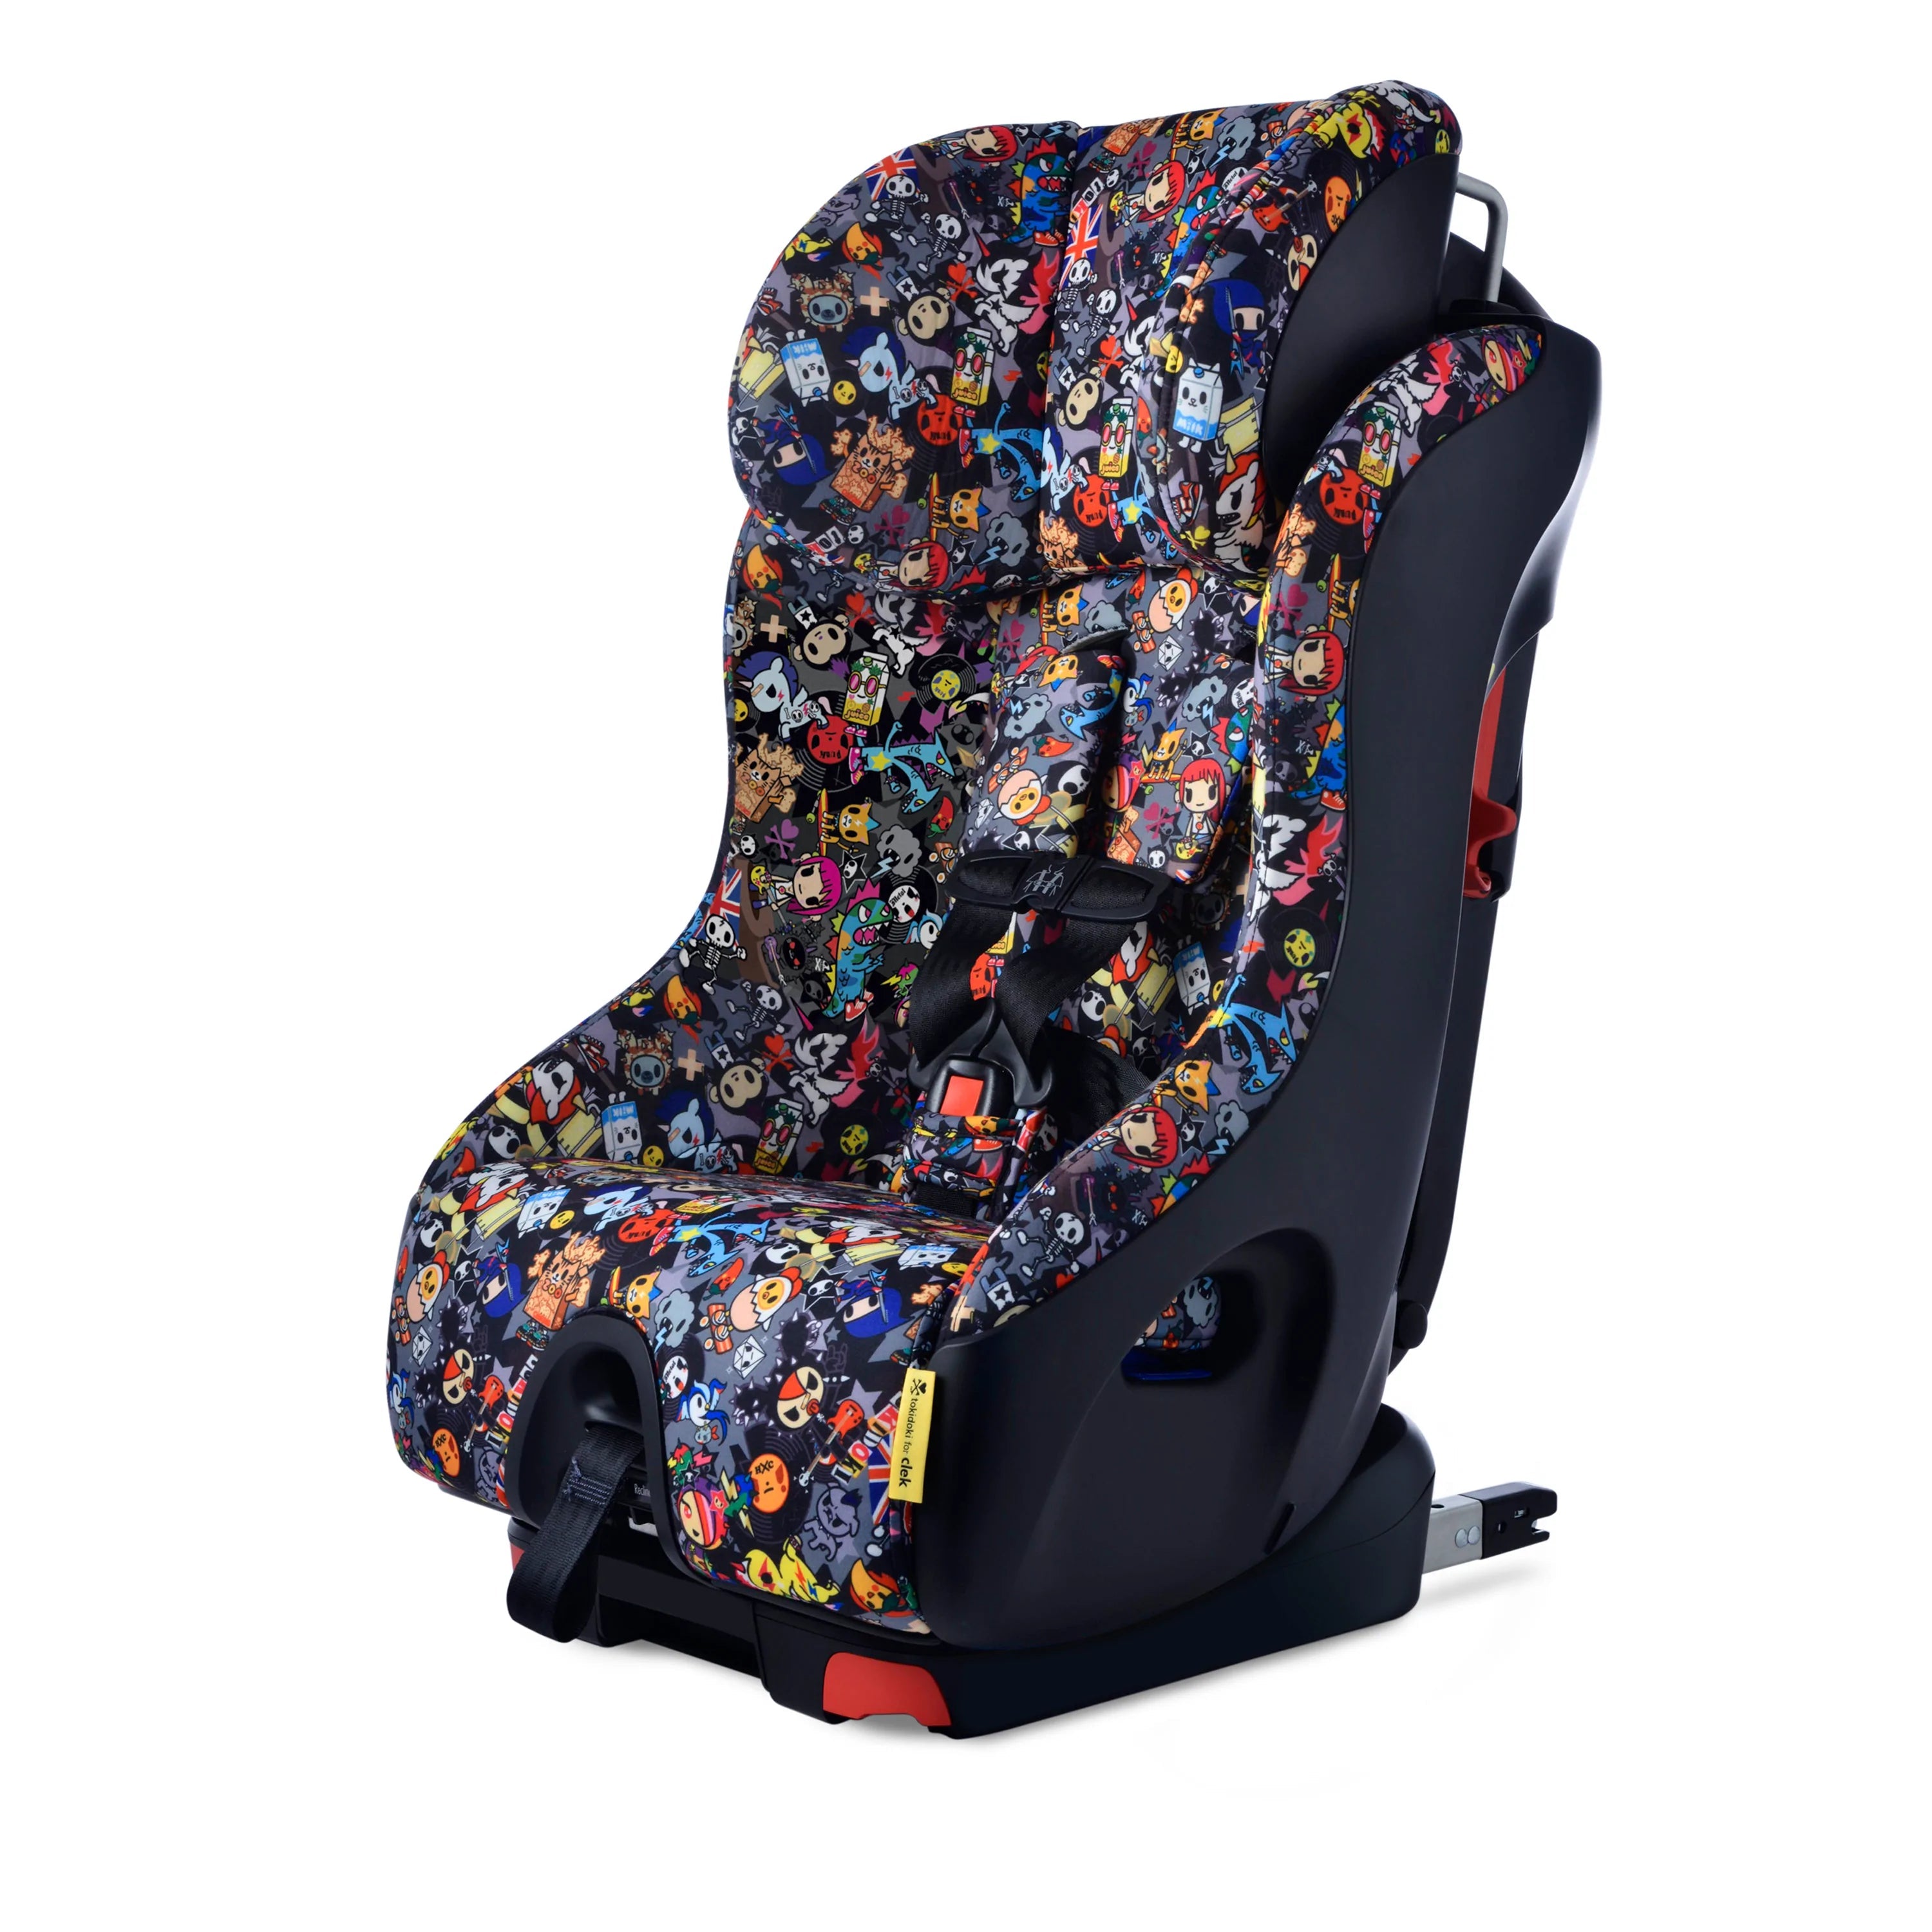 Clek Foonf Convertible Car Seat, -- ANB Baby